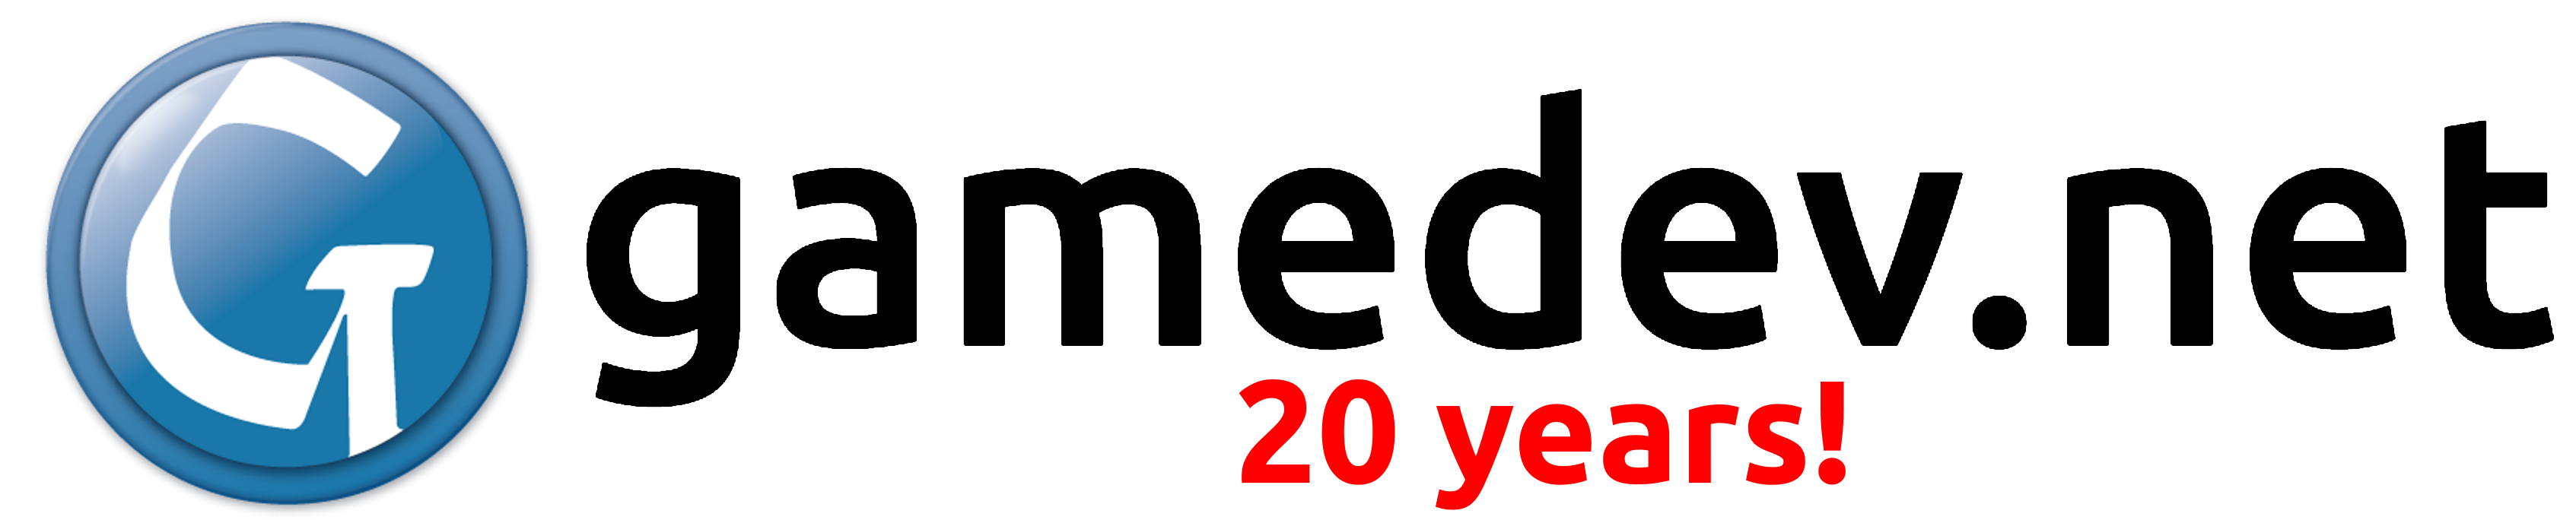 Celebrating 20 Years of GameDev.net